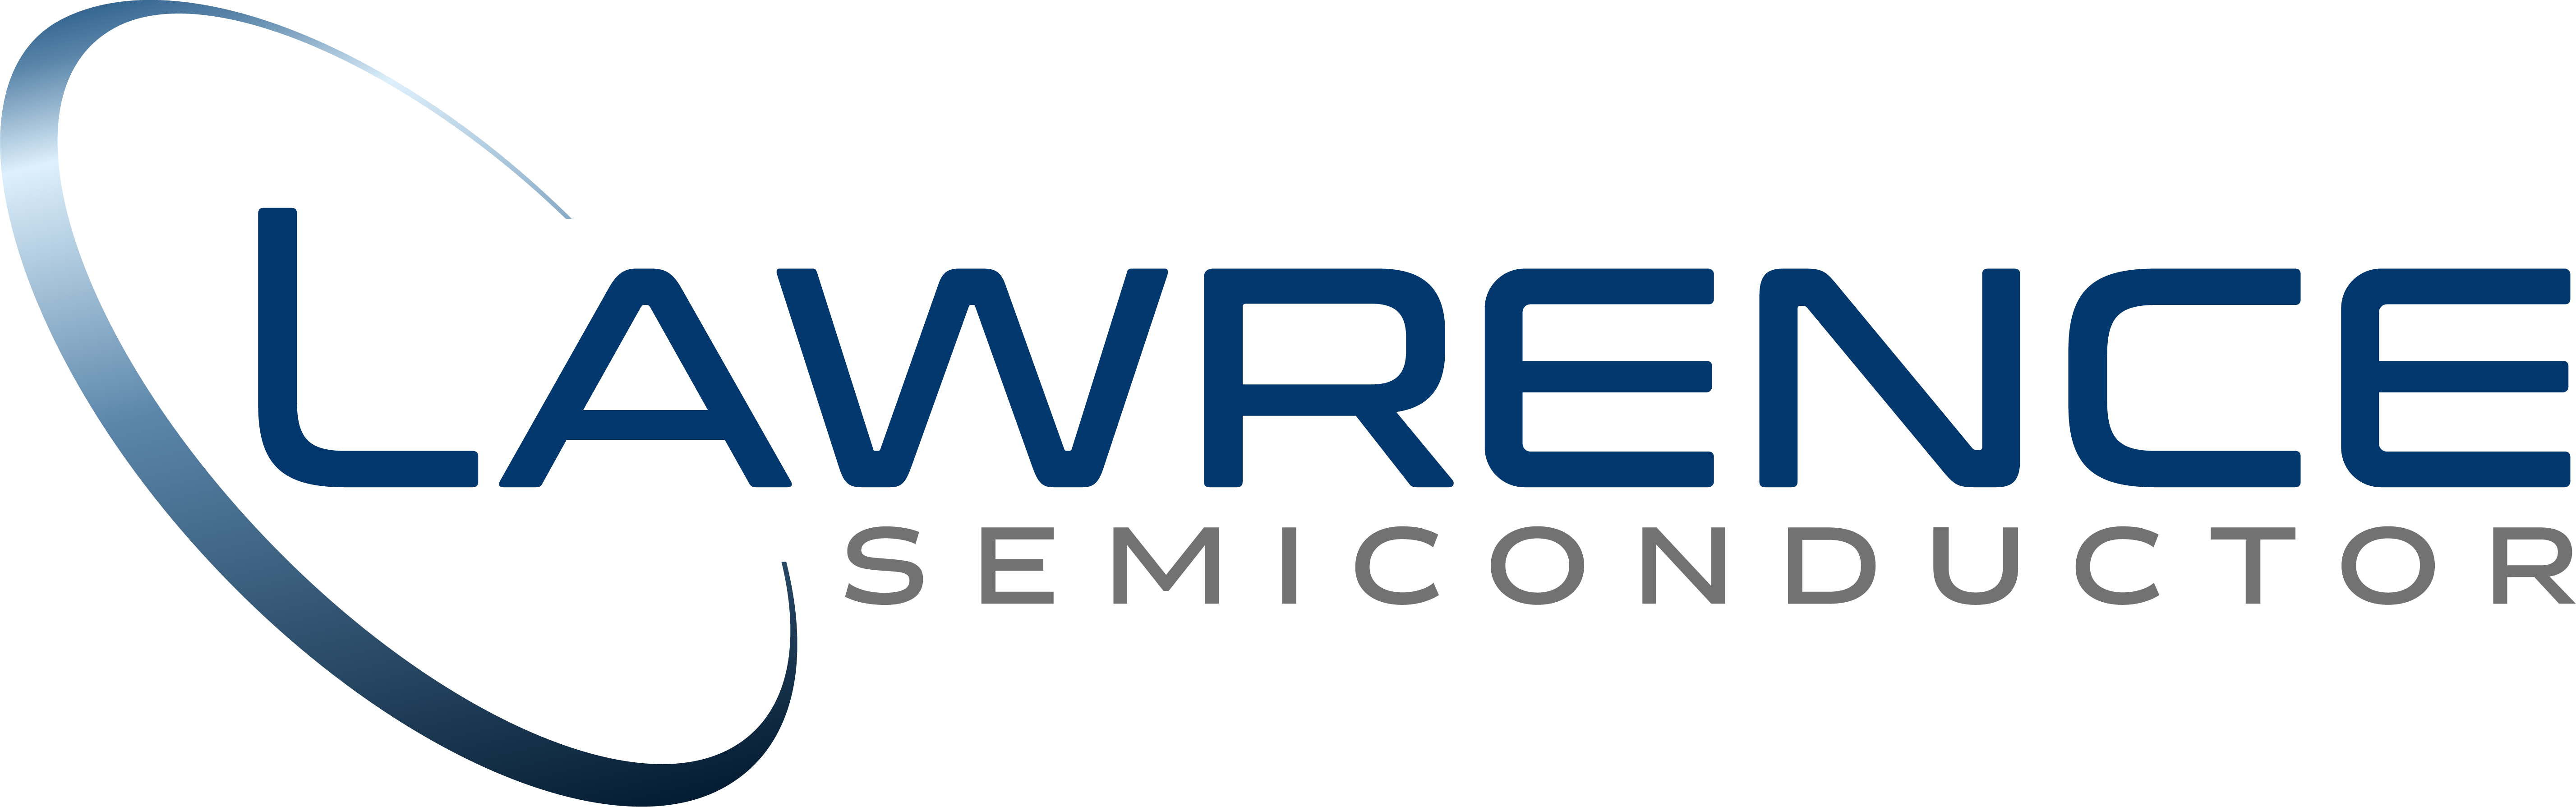 Lawrence Semiconductor Logo